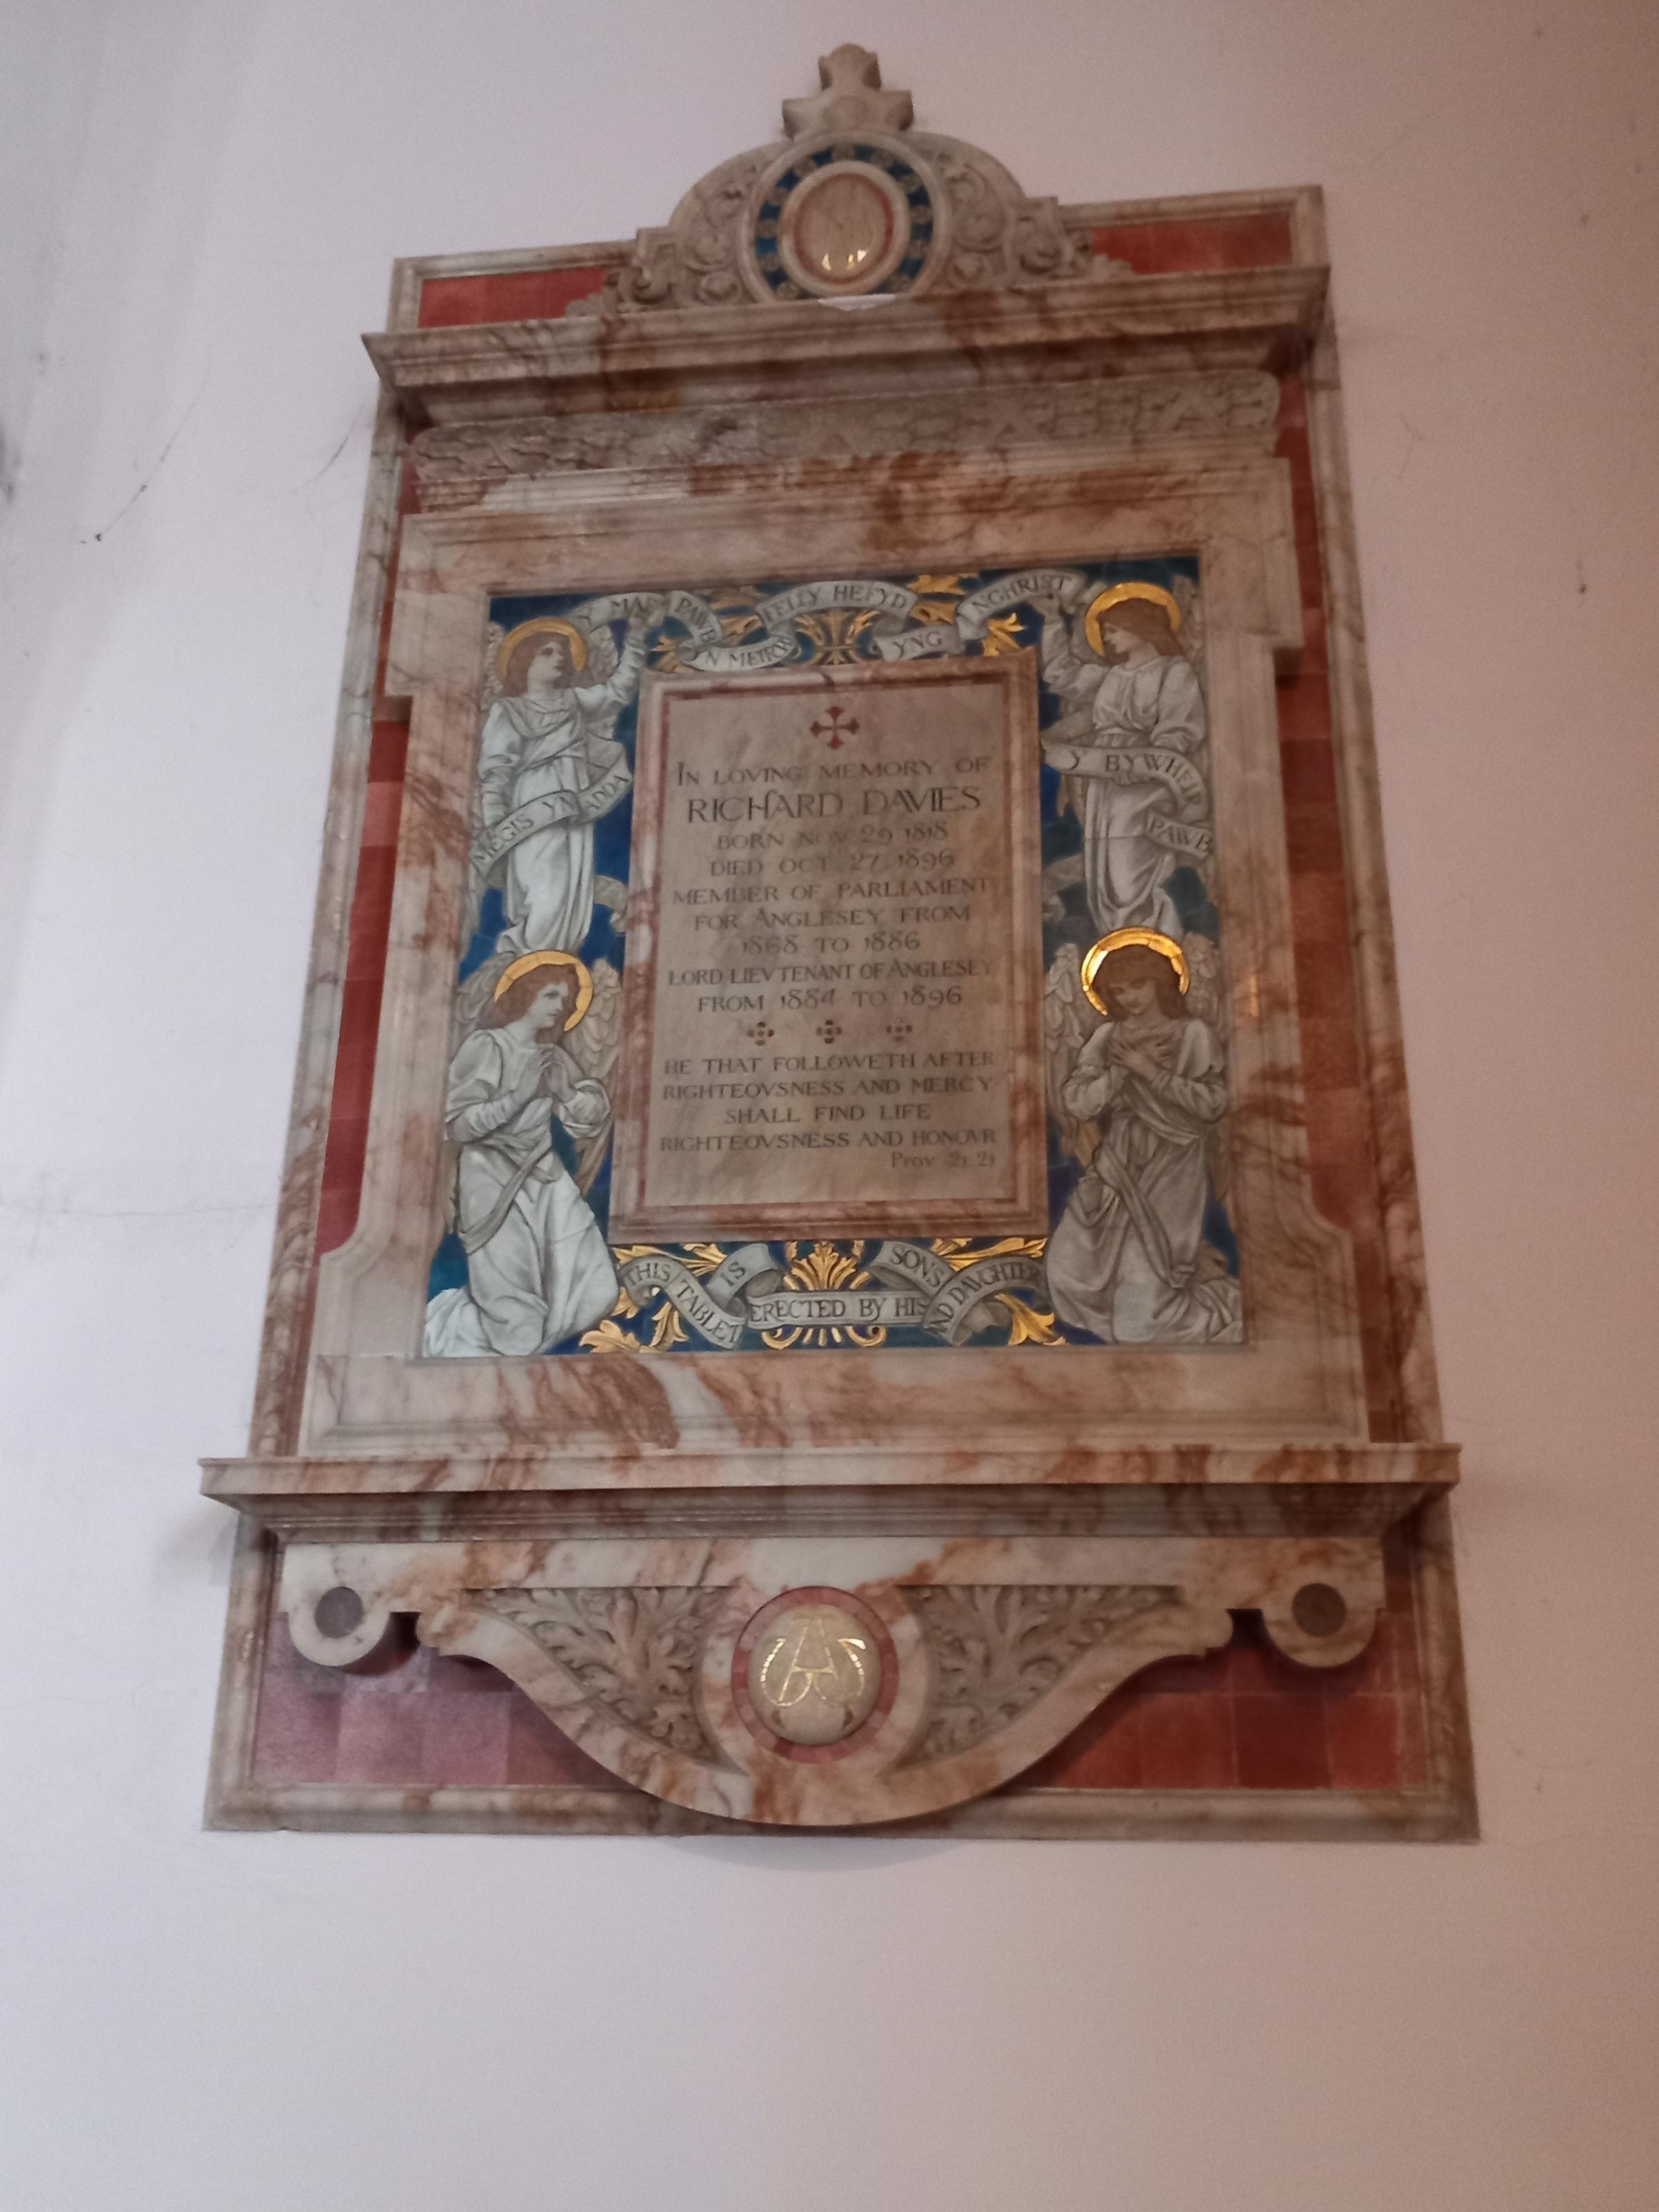 Memorial to Richard Davies - the barrelled ceiling Menai Bridge English Presbyterian Church Renovation (Dale Spridgeon Image)